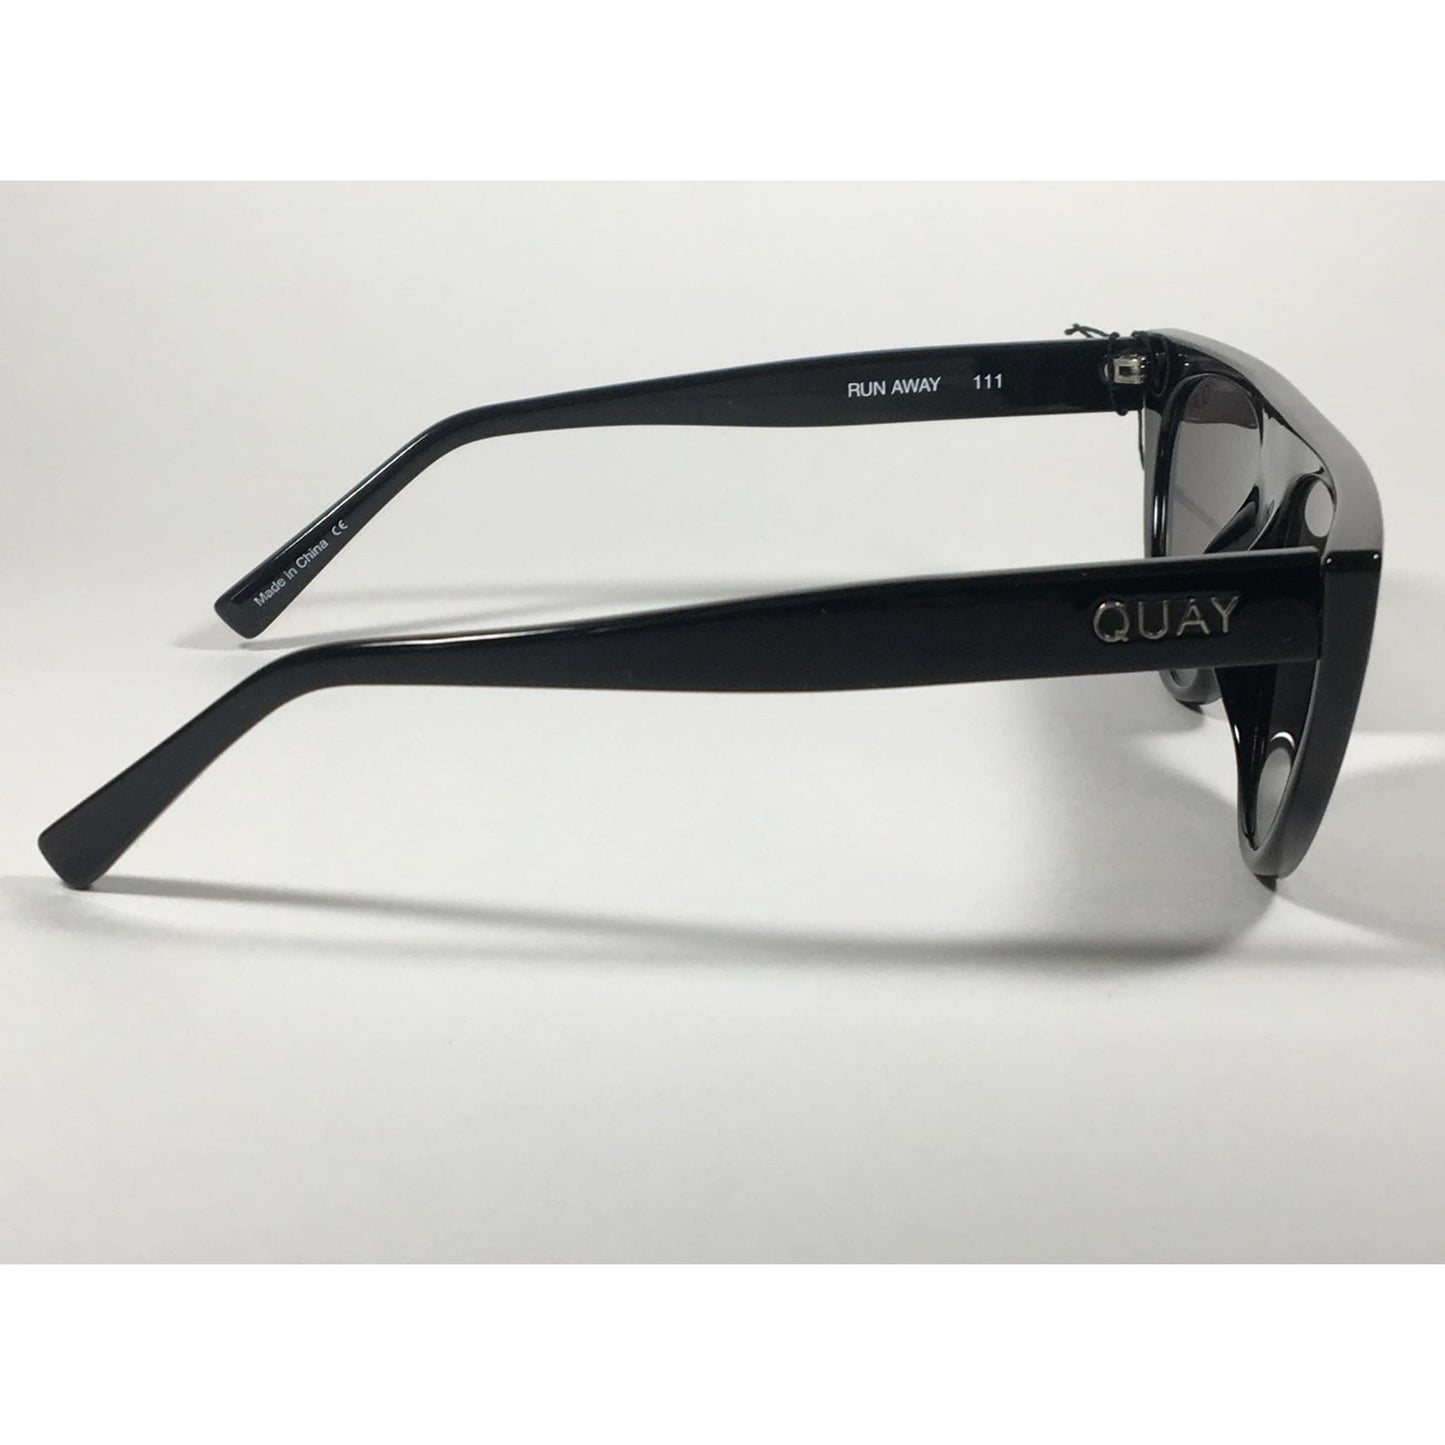 Quay Australia QW000296 BLK/SMK Run Away Flat Top Cat Eye Sunglasses Black Gloss Frame Gray Smoke Lenses - Sunglasses